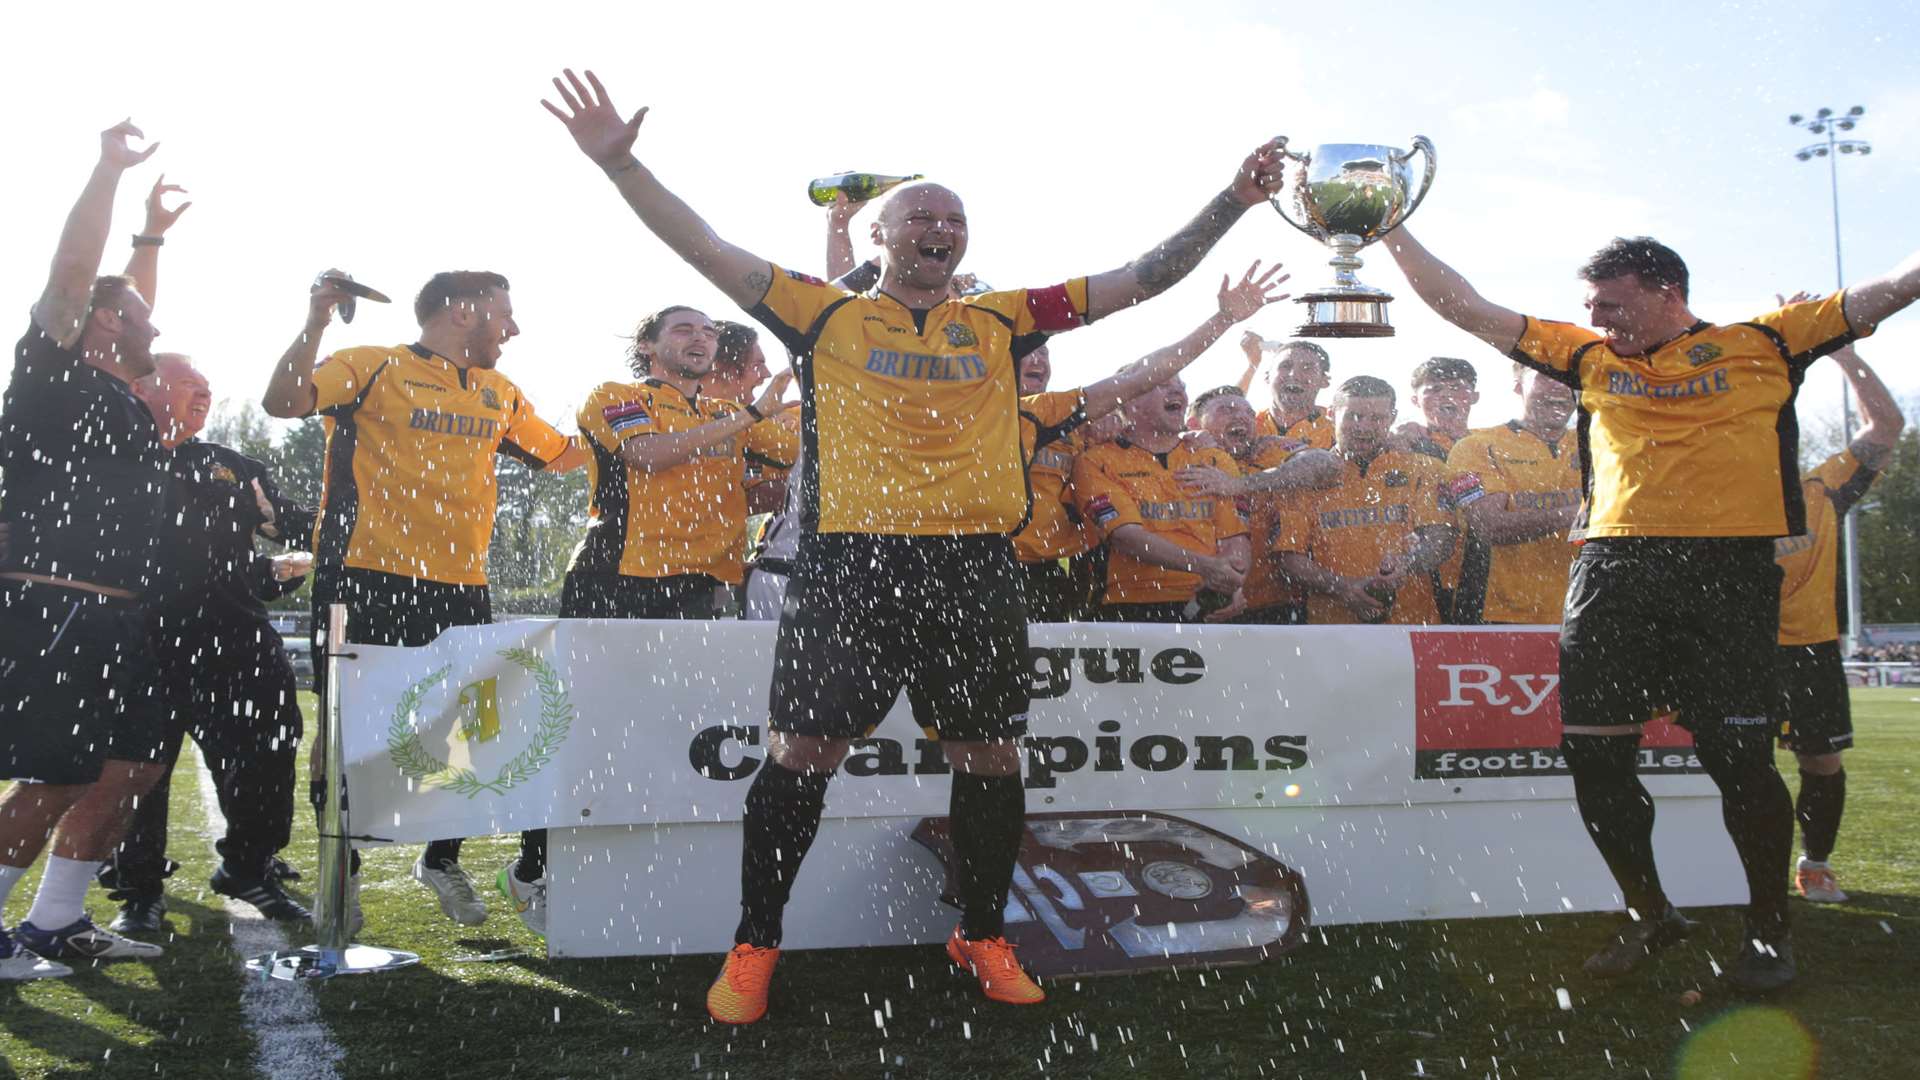 Maidstone United - Ryman League Premier Division champions 2014/15. Picture: Martin Apps